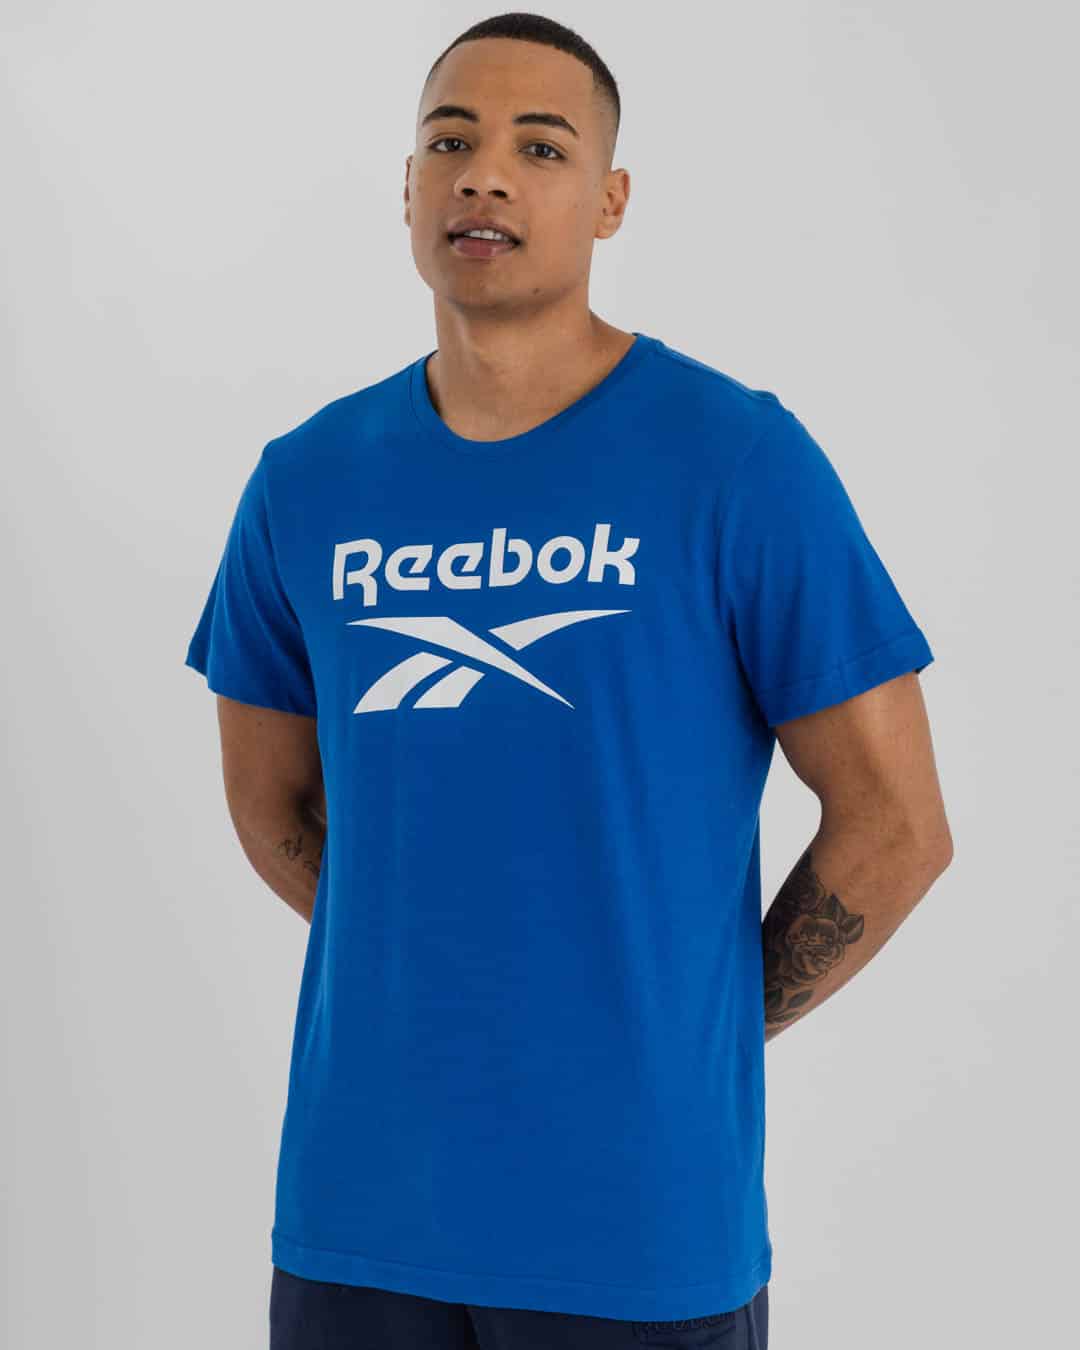 Full length shot of man wearing Blue Reebok t-shirt with Reebok Logo on chest in white & navy blue shorts.